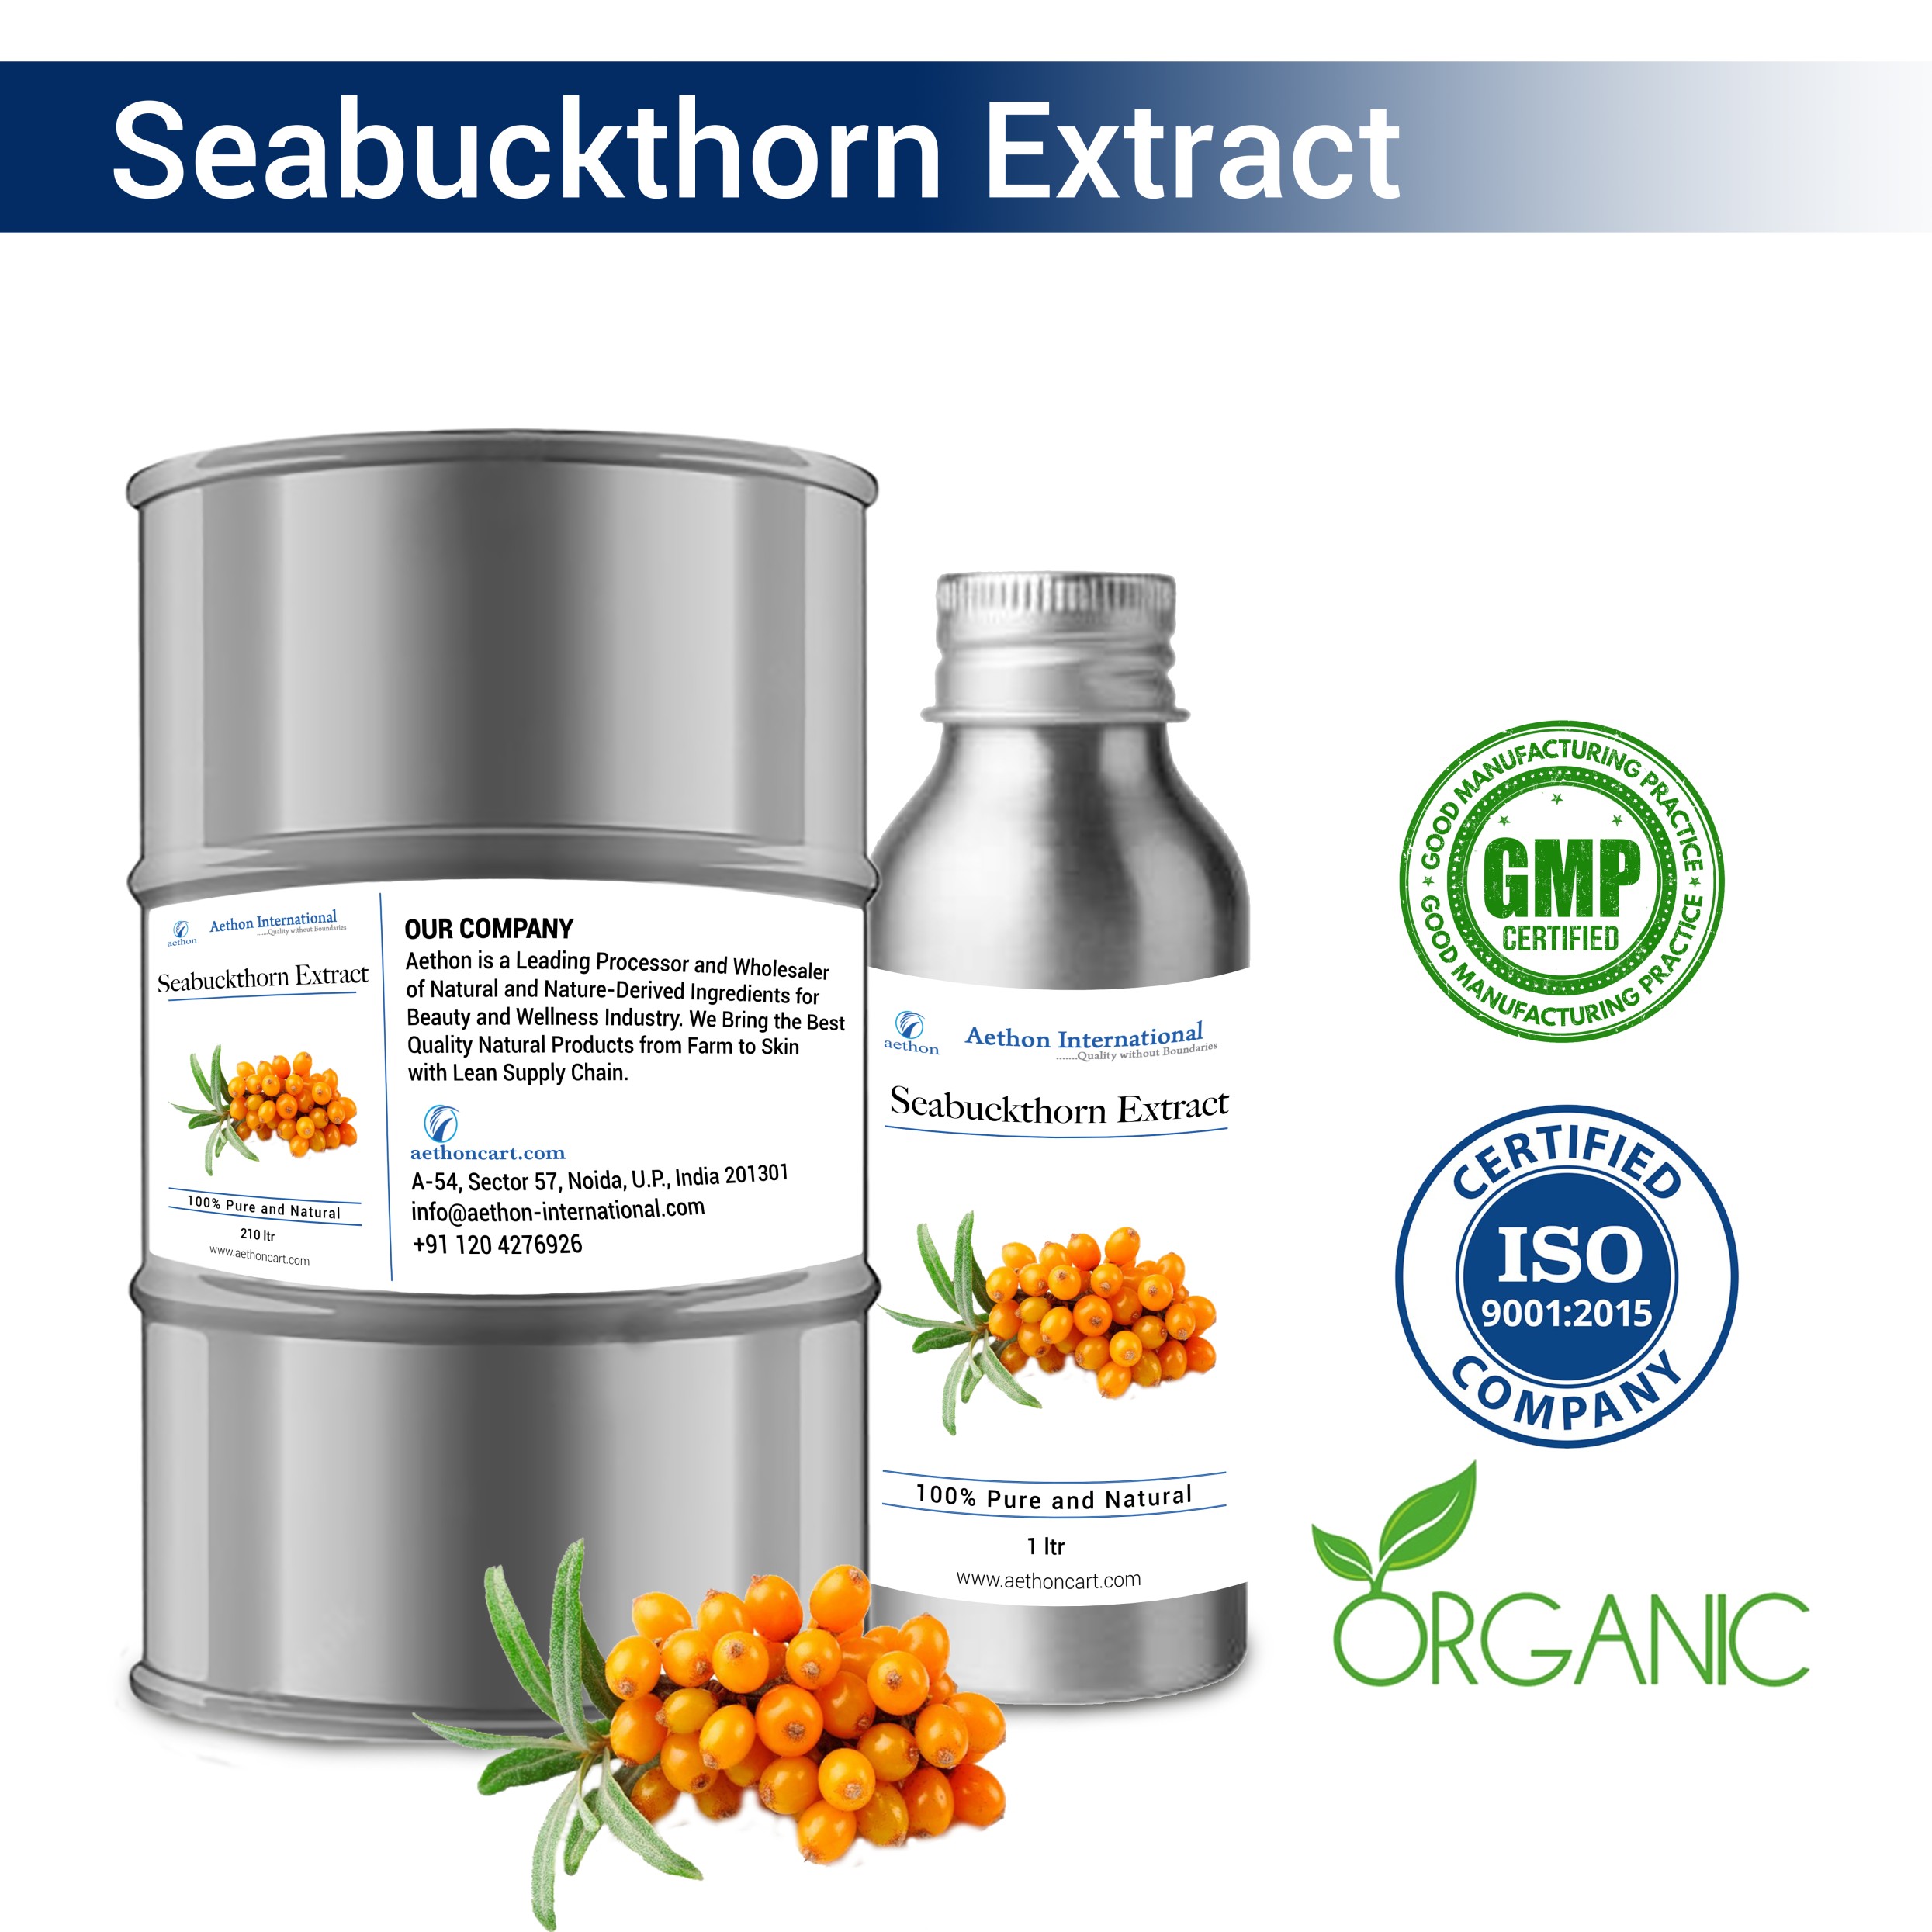 Seabuckthorn Extract